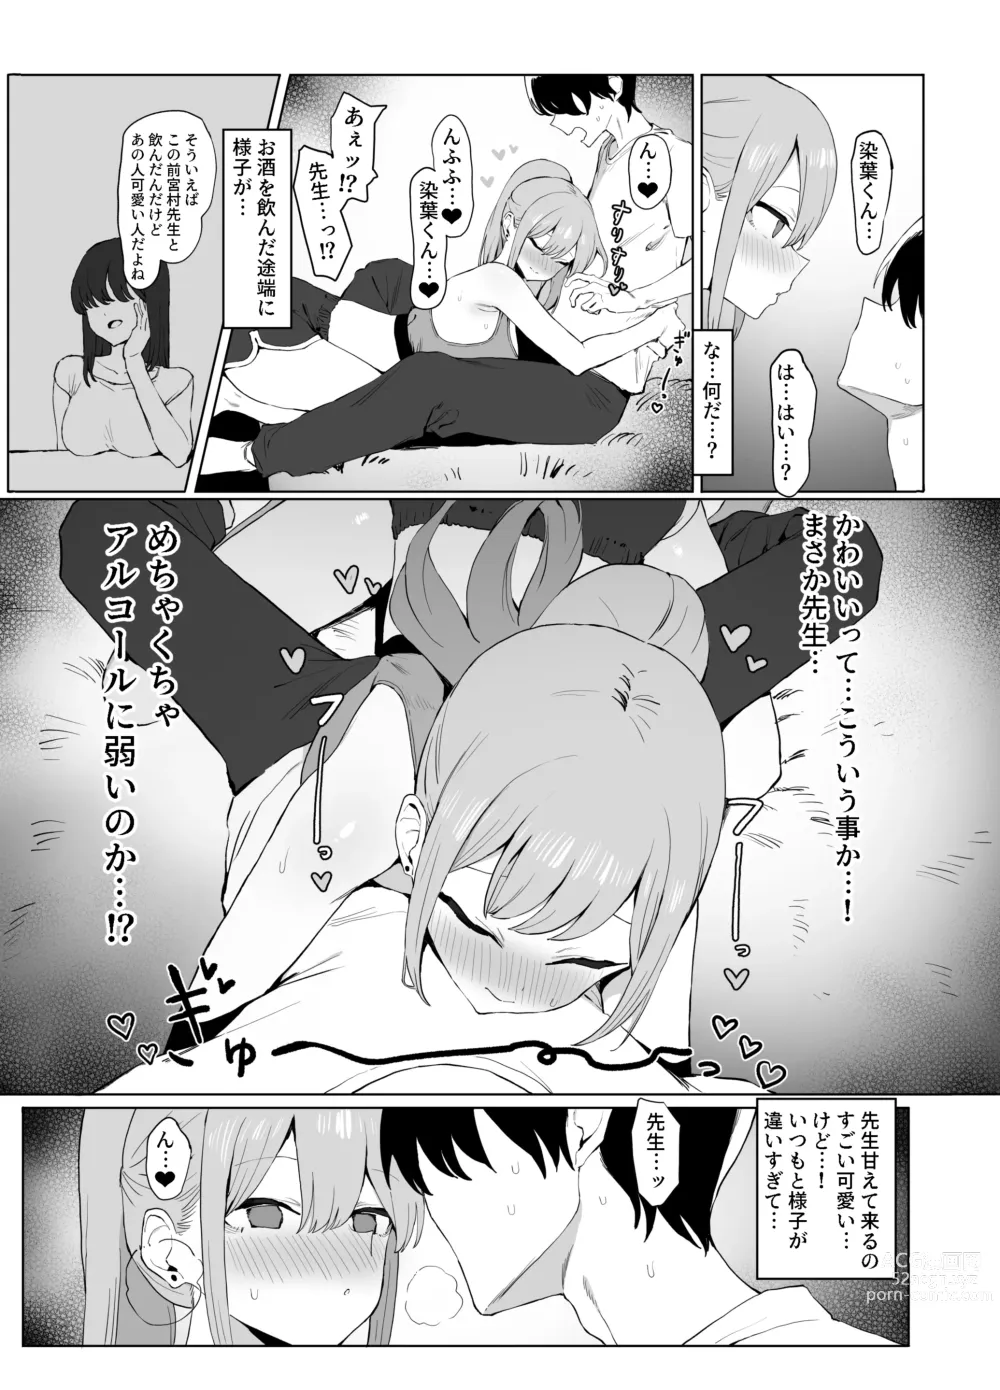 Page 58 of doujinshi Seikoui Jisshuu 2